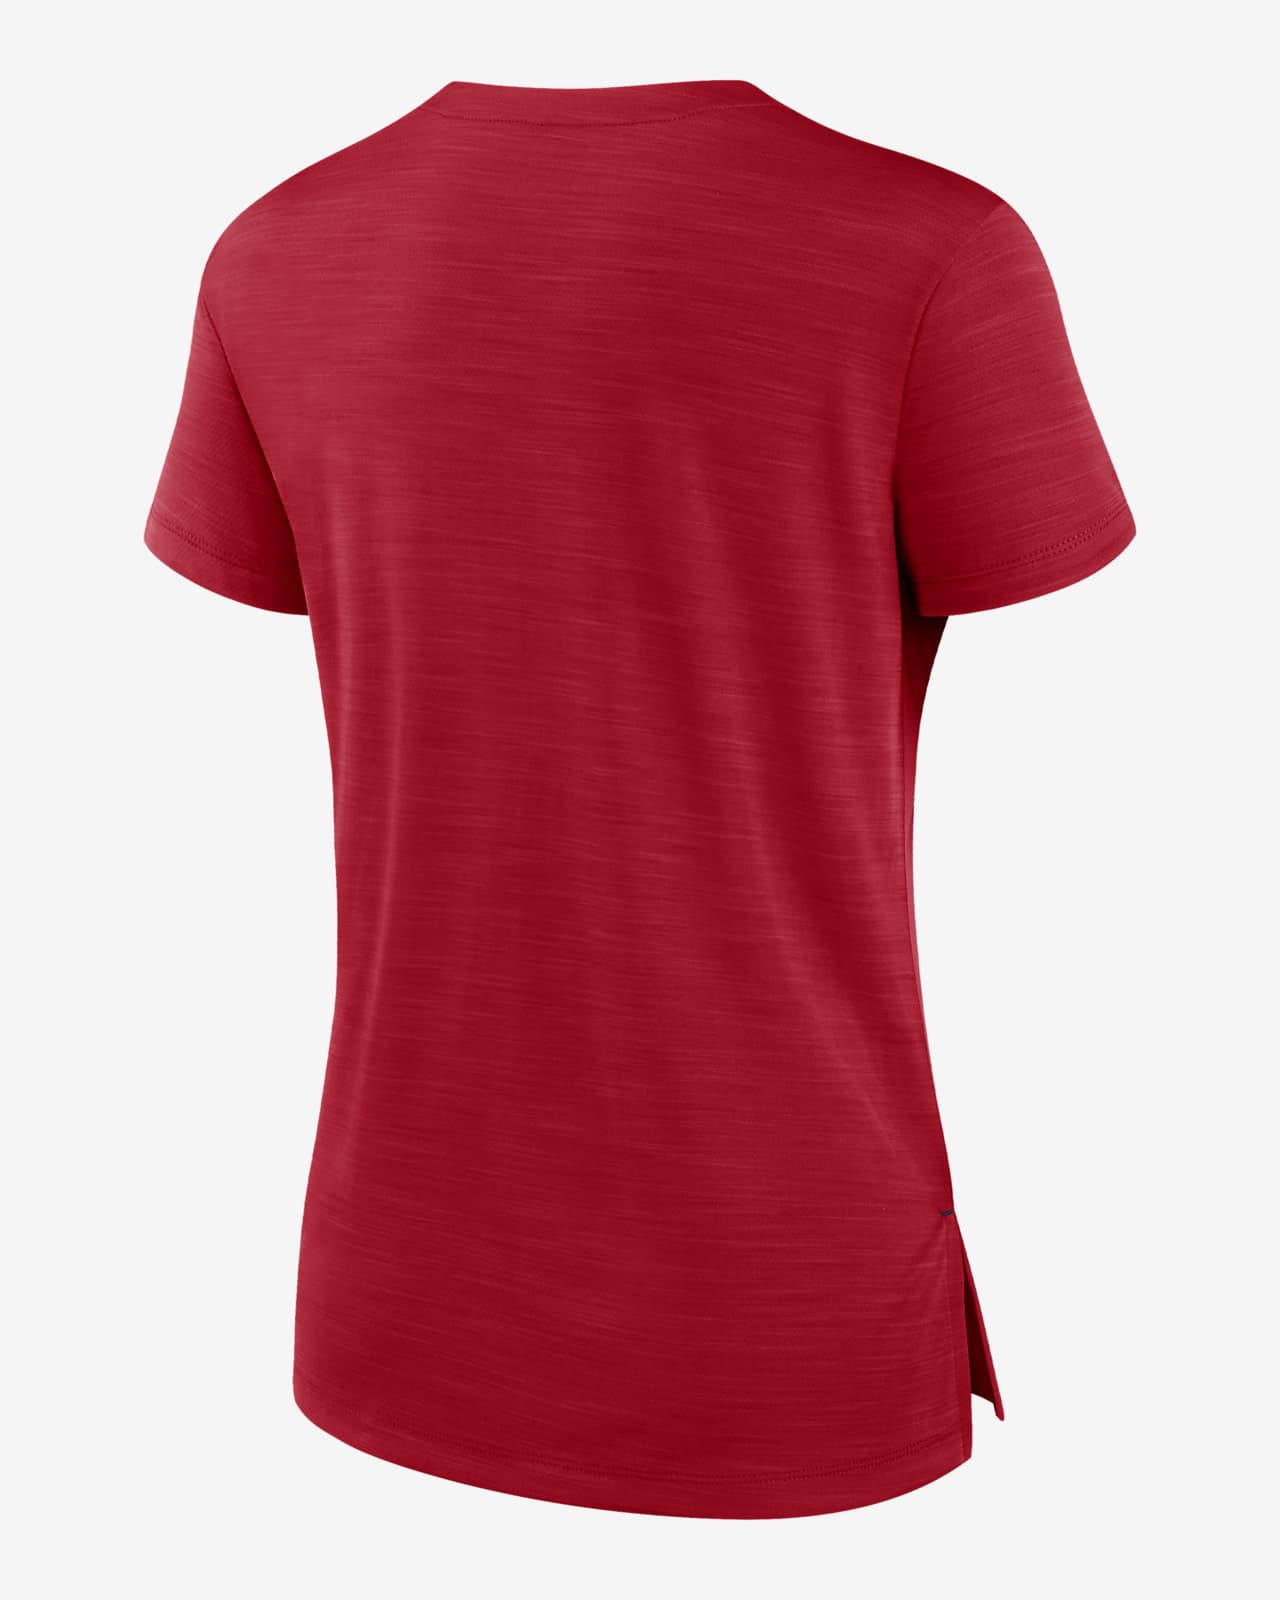 Nike Breathe Pure Pride (MLB St. Louis Cardinals) Women's Notch Neck T-Shirt.